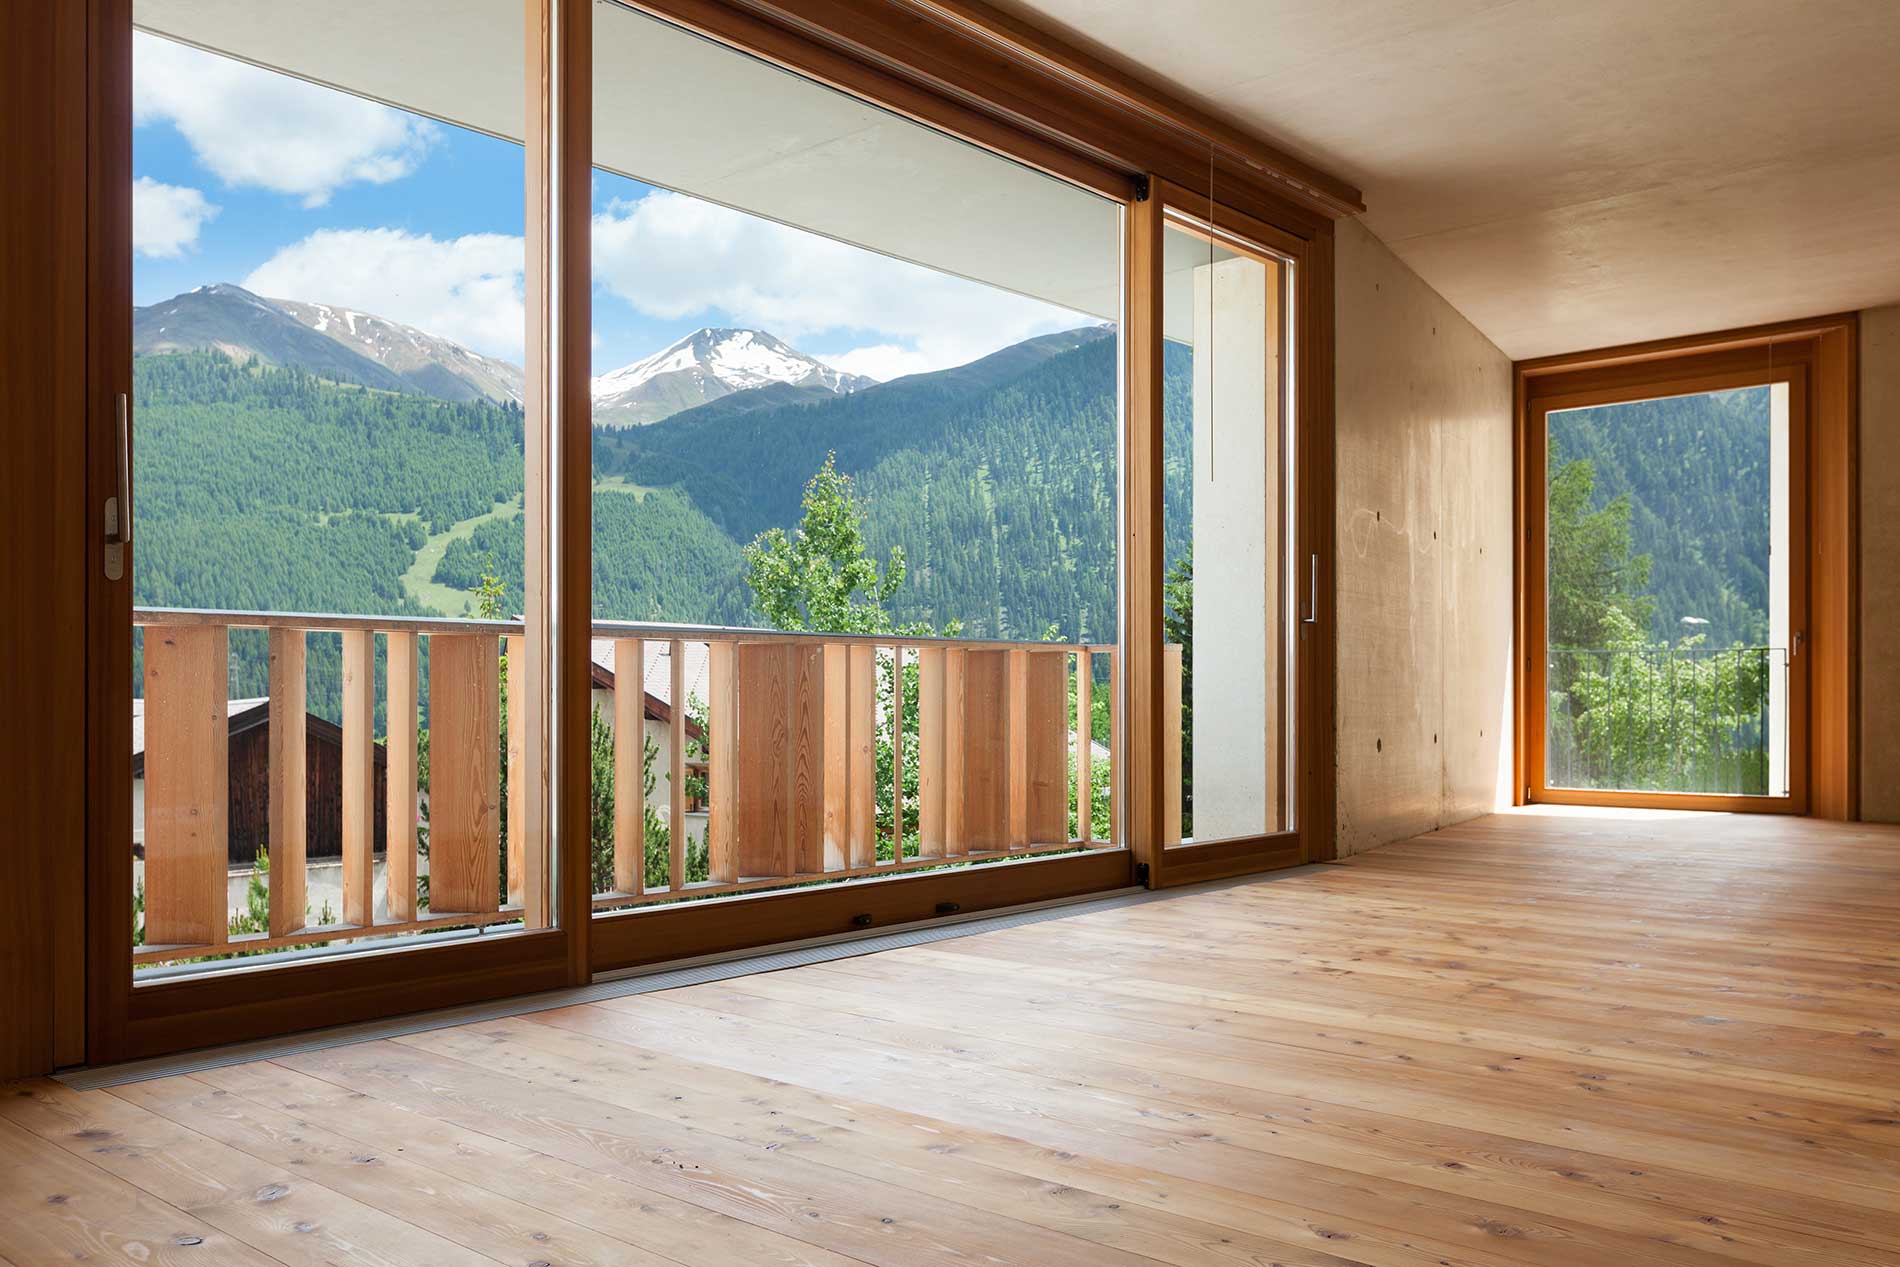 Floor to Ceiling Windows with hardwood floors